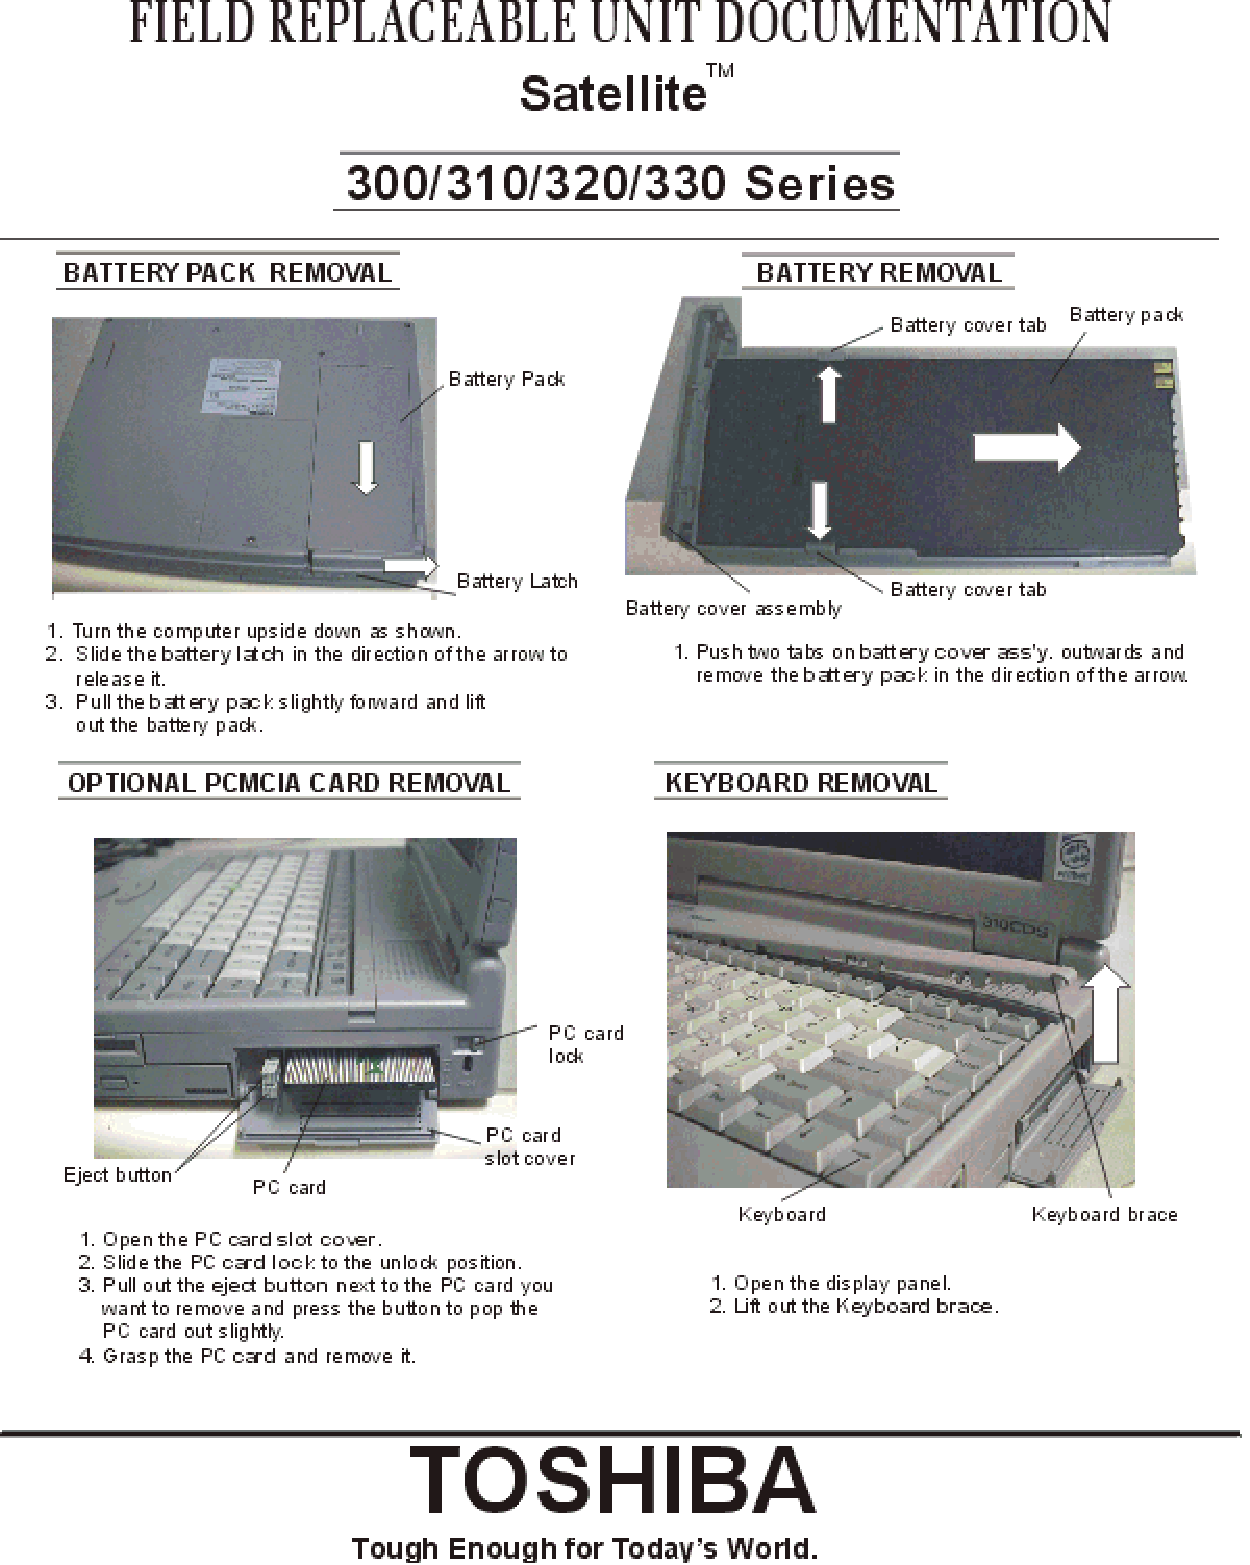 Toshiba Satellite 330, Satellite 320, Satellite 300, Satellite 310 Service Manual